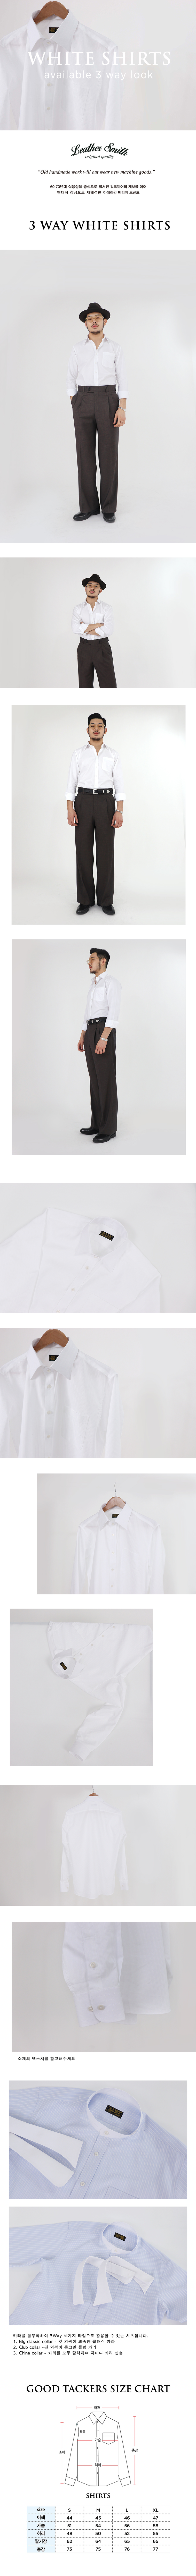 white-shirts_205249.jpg